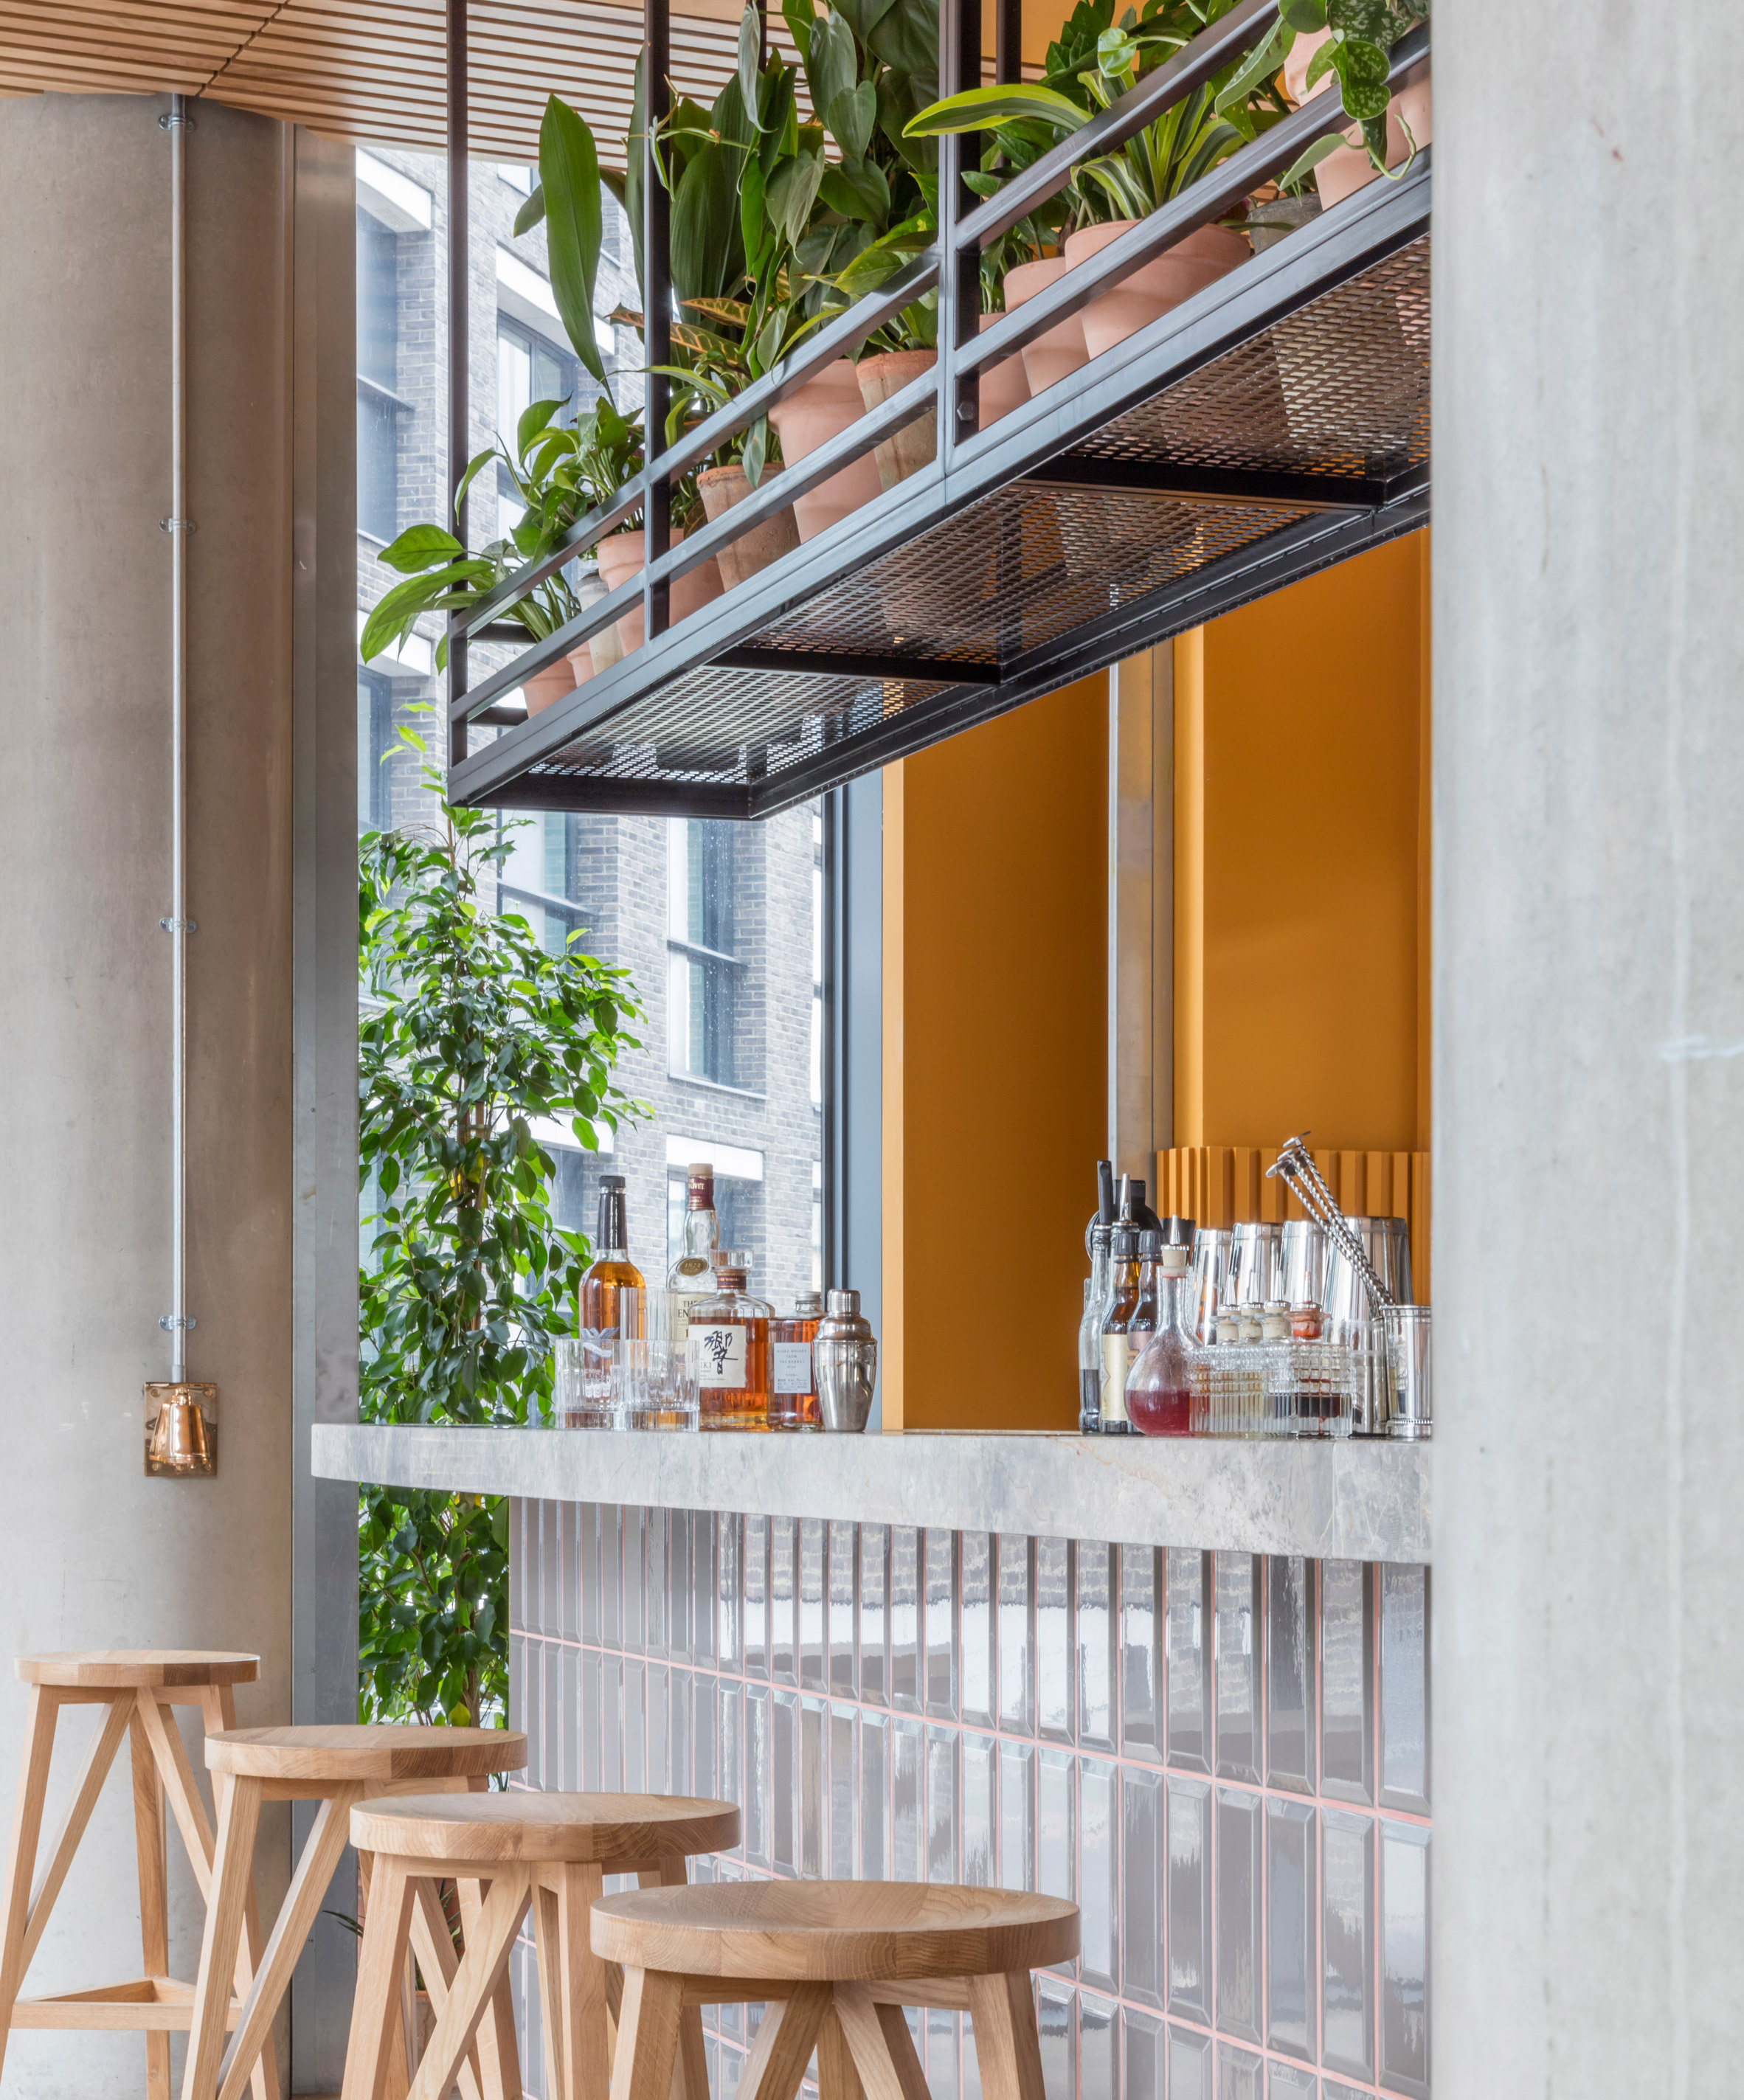 Cement grey meets bright ochre in Grzywinski + Pons' London restaurant interior